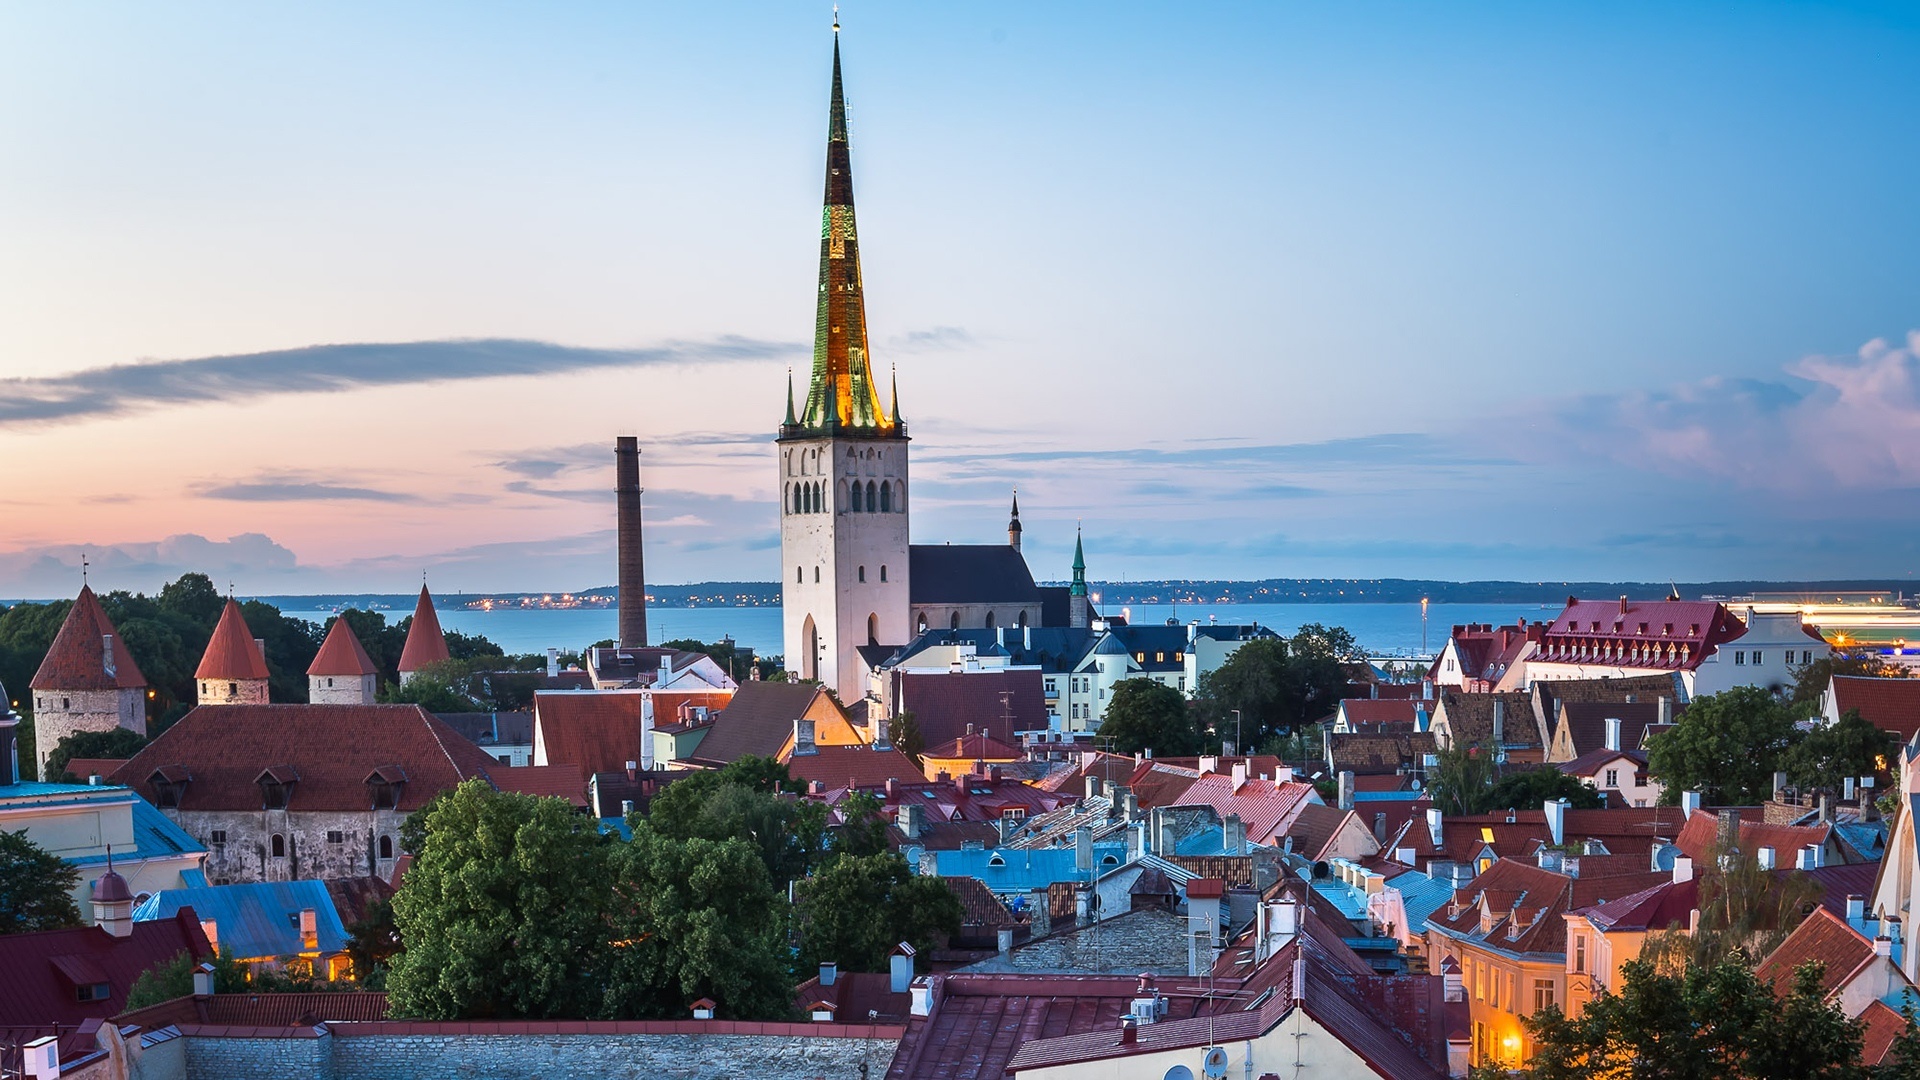 Tallinn Picture